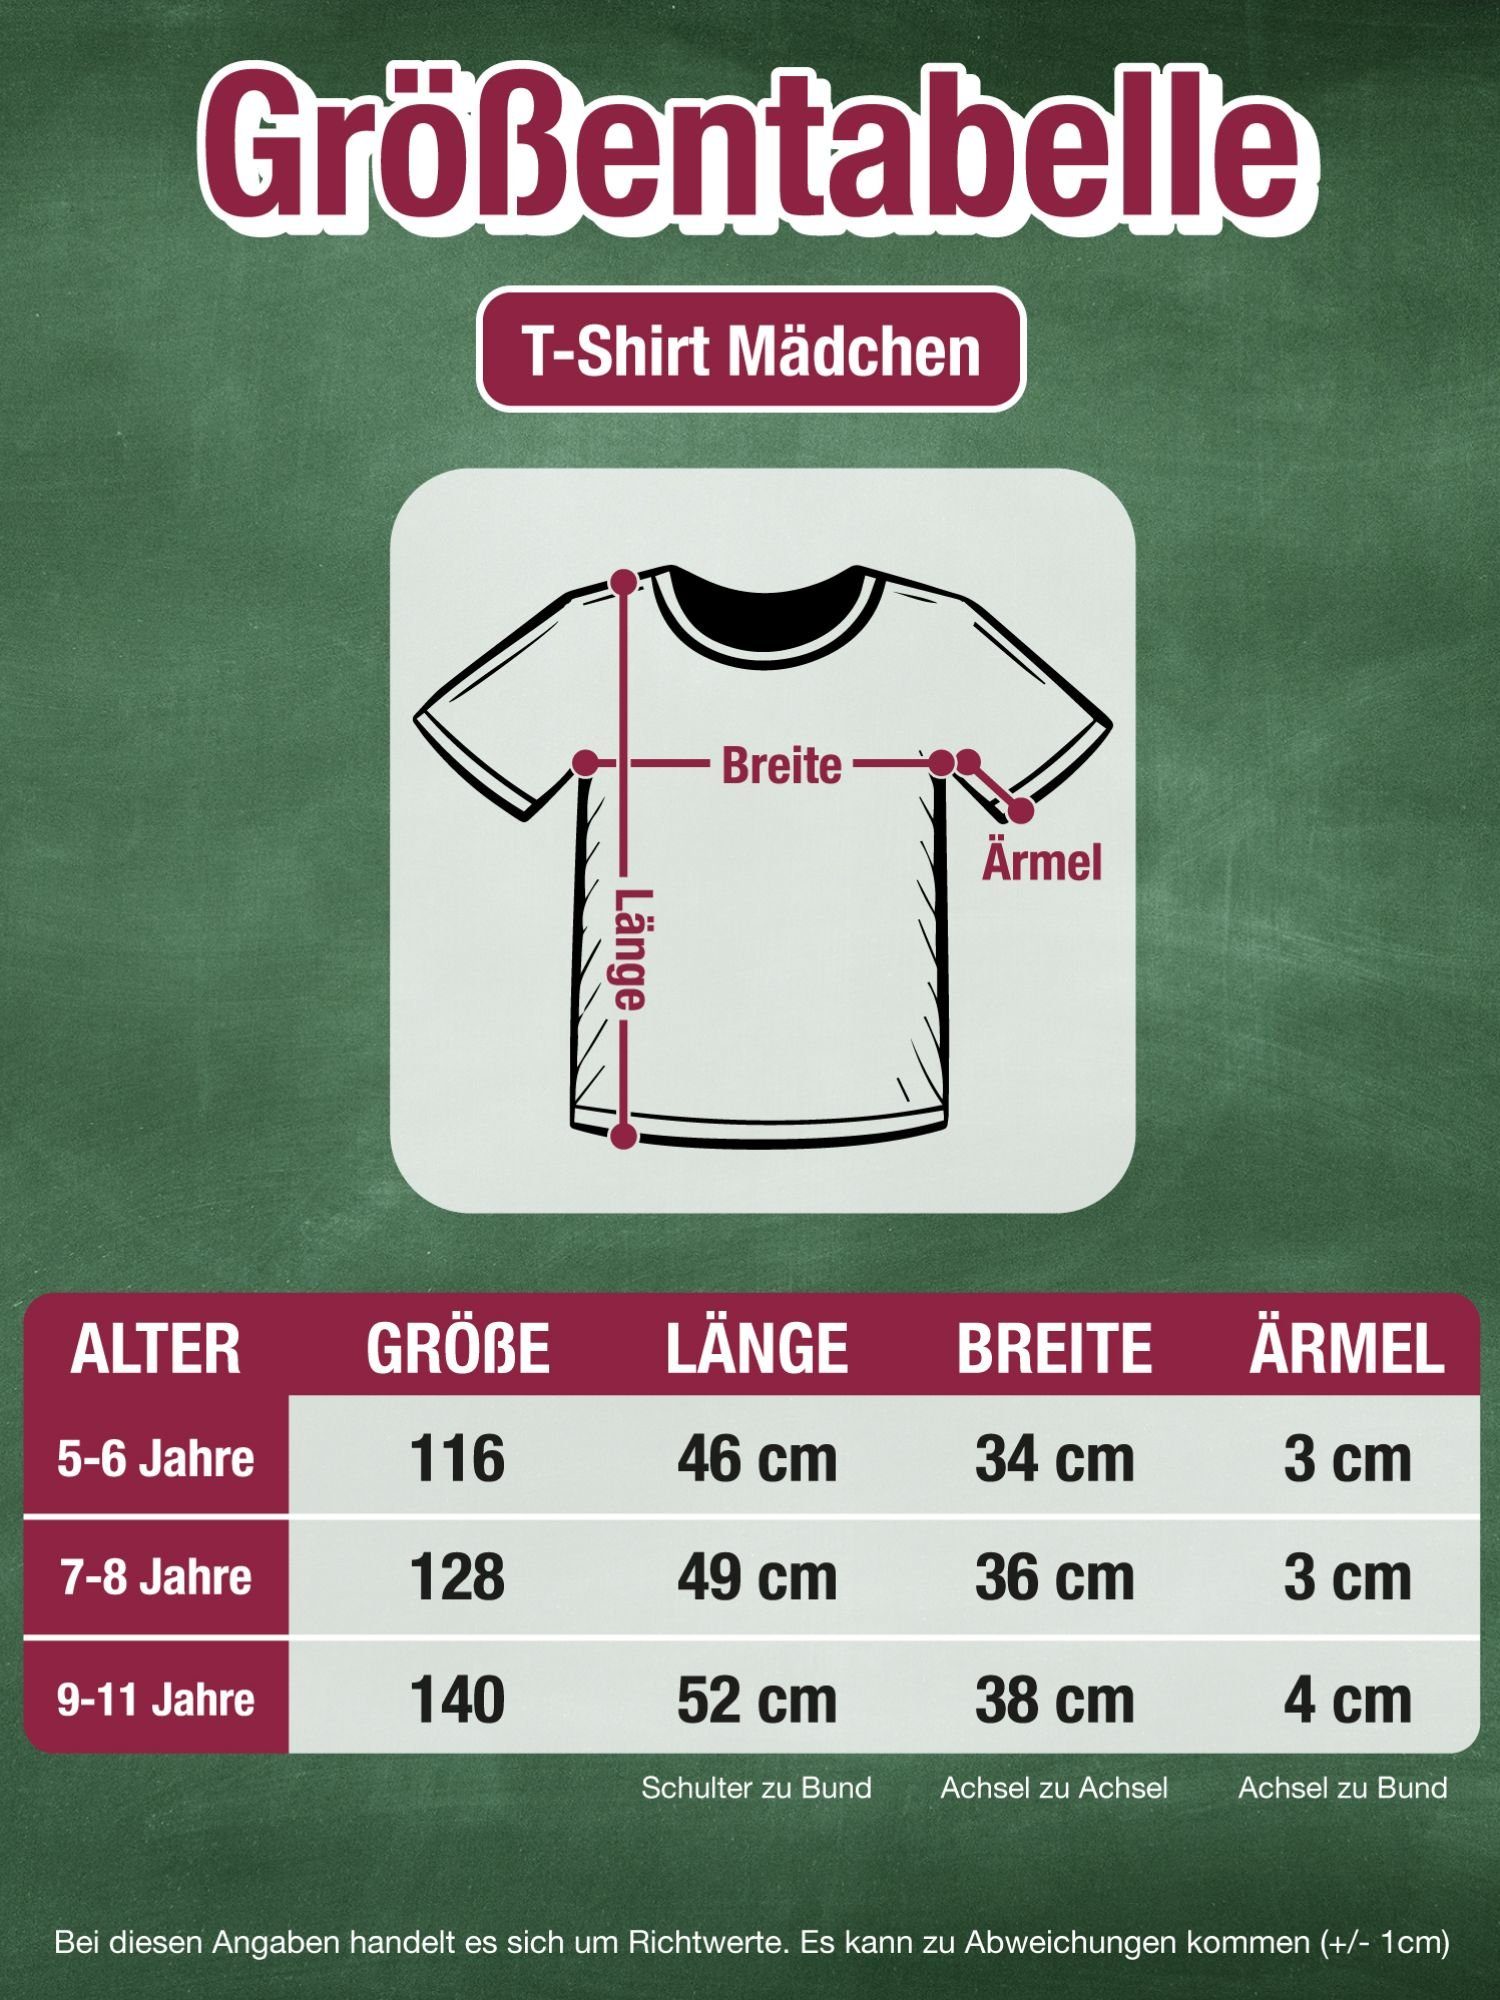 Mädchen Einschulung Bye T-Shirt Bye, Shirtracer Kindergarten 1 Fuchsia